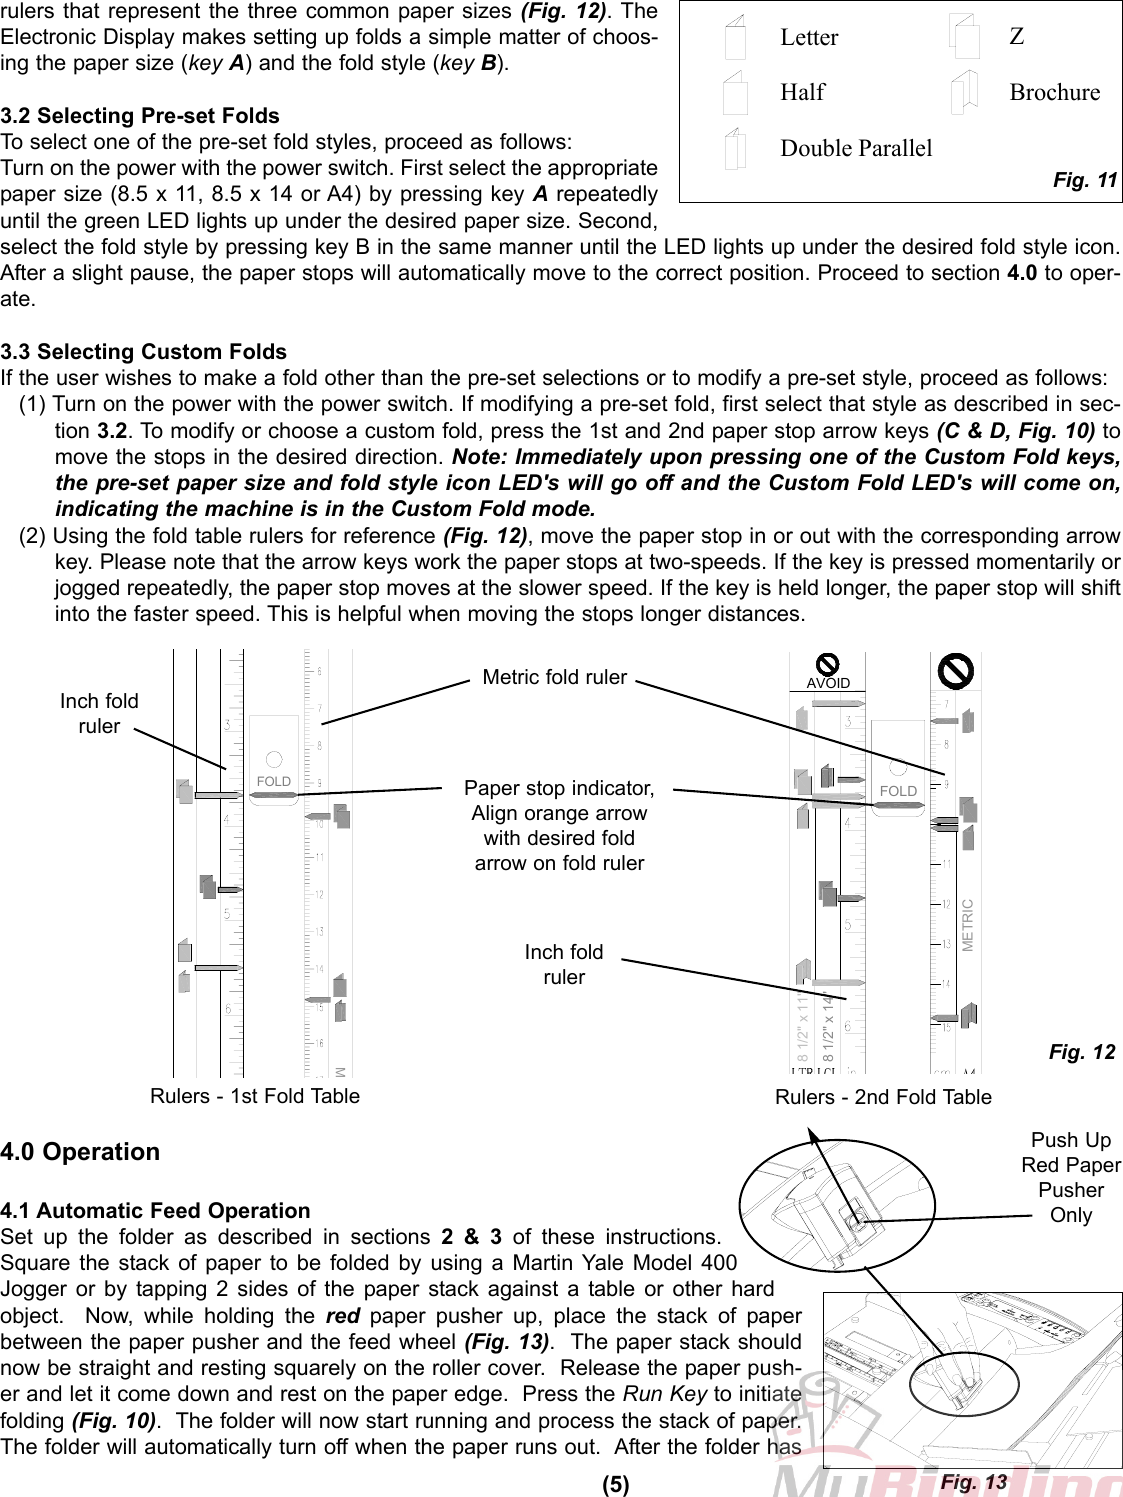 Page 6 of 9 - MyBinding Martin-Yale-1701-Operation-Instructions User Manual